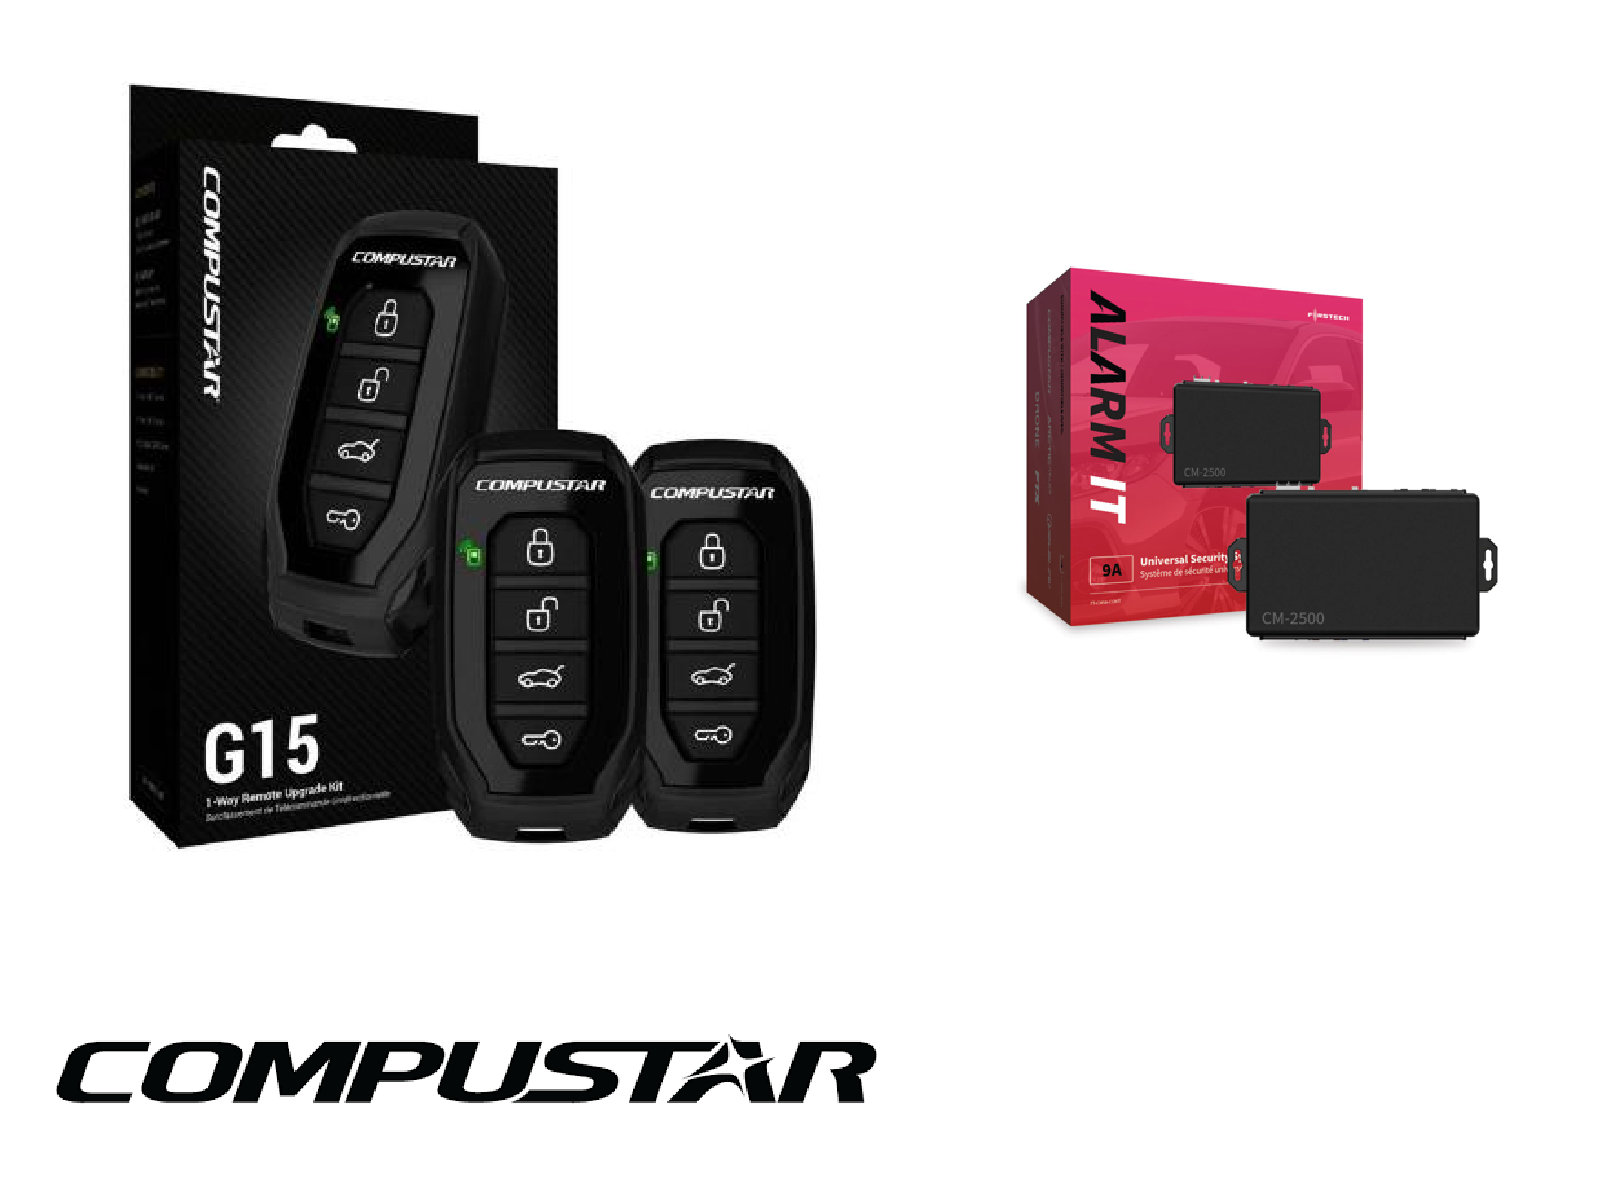 Compustar G15FM with FT-CM9A-CONT Car Alarm, 1-Way, 2000 Foot Range